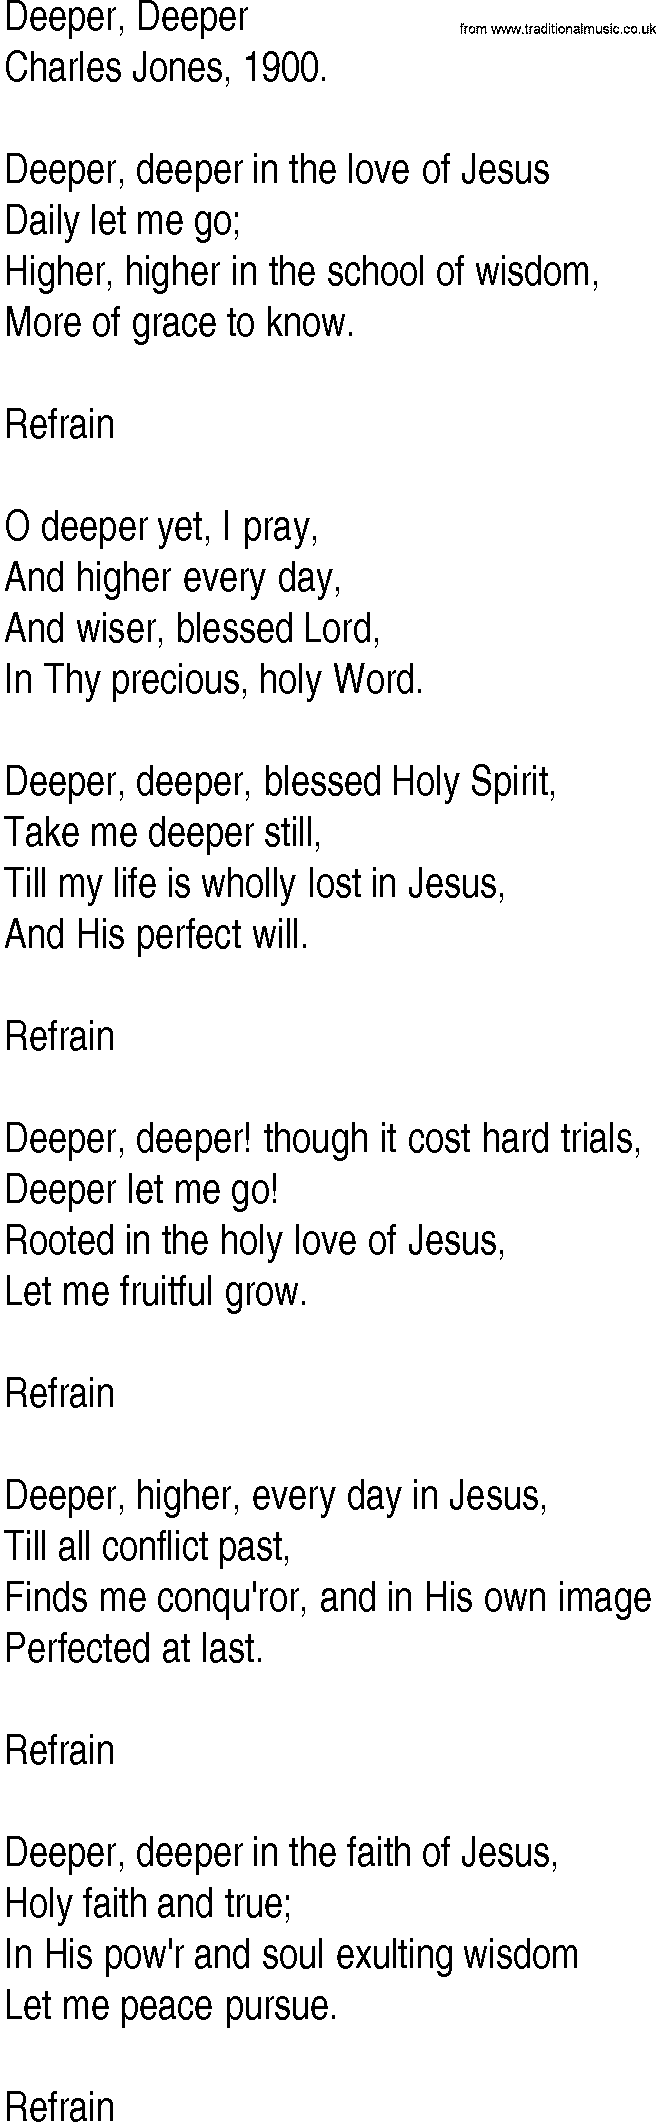 Hymn and Gospel Song: Deeper, Deeper by Charles Jones lyrics